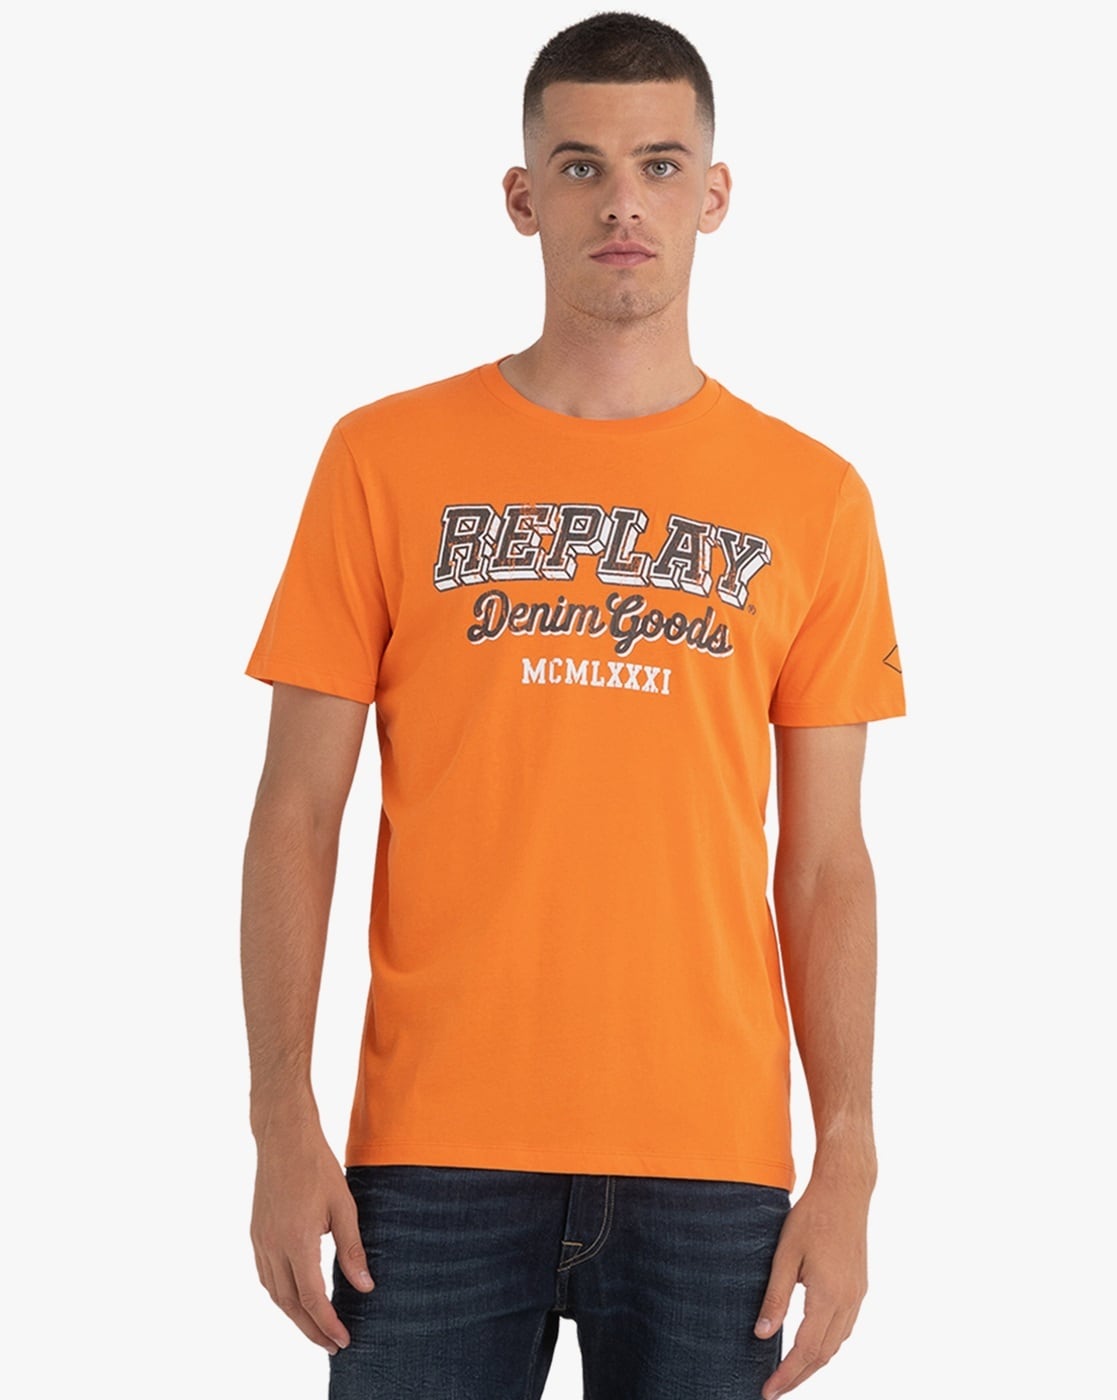 Replay Jeans Logo T Shirt